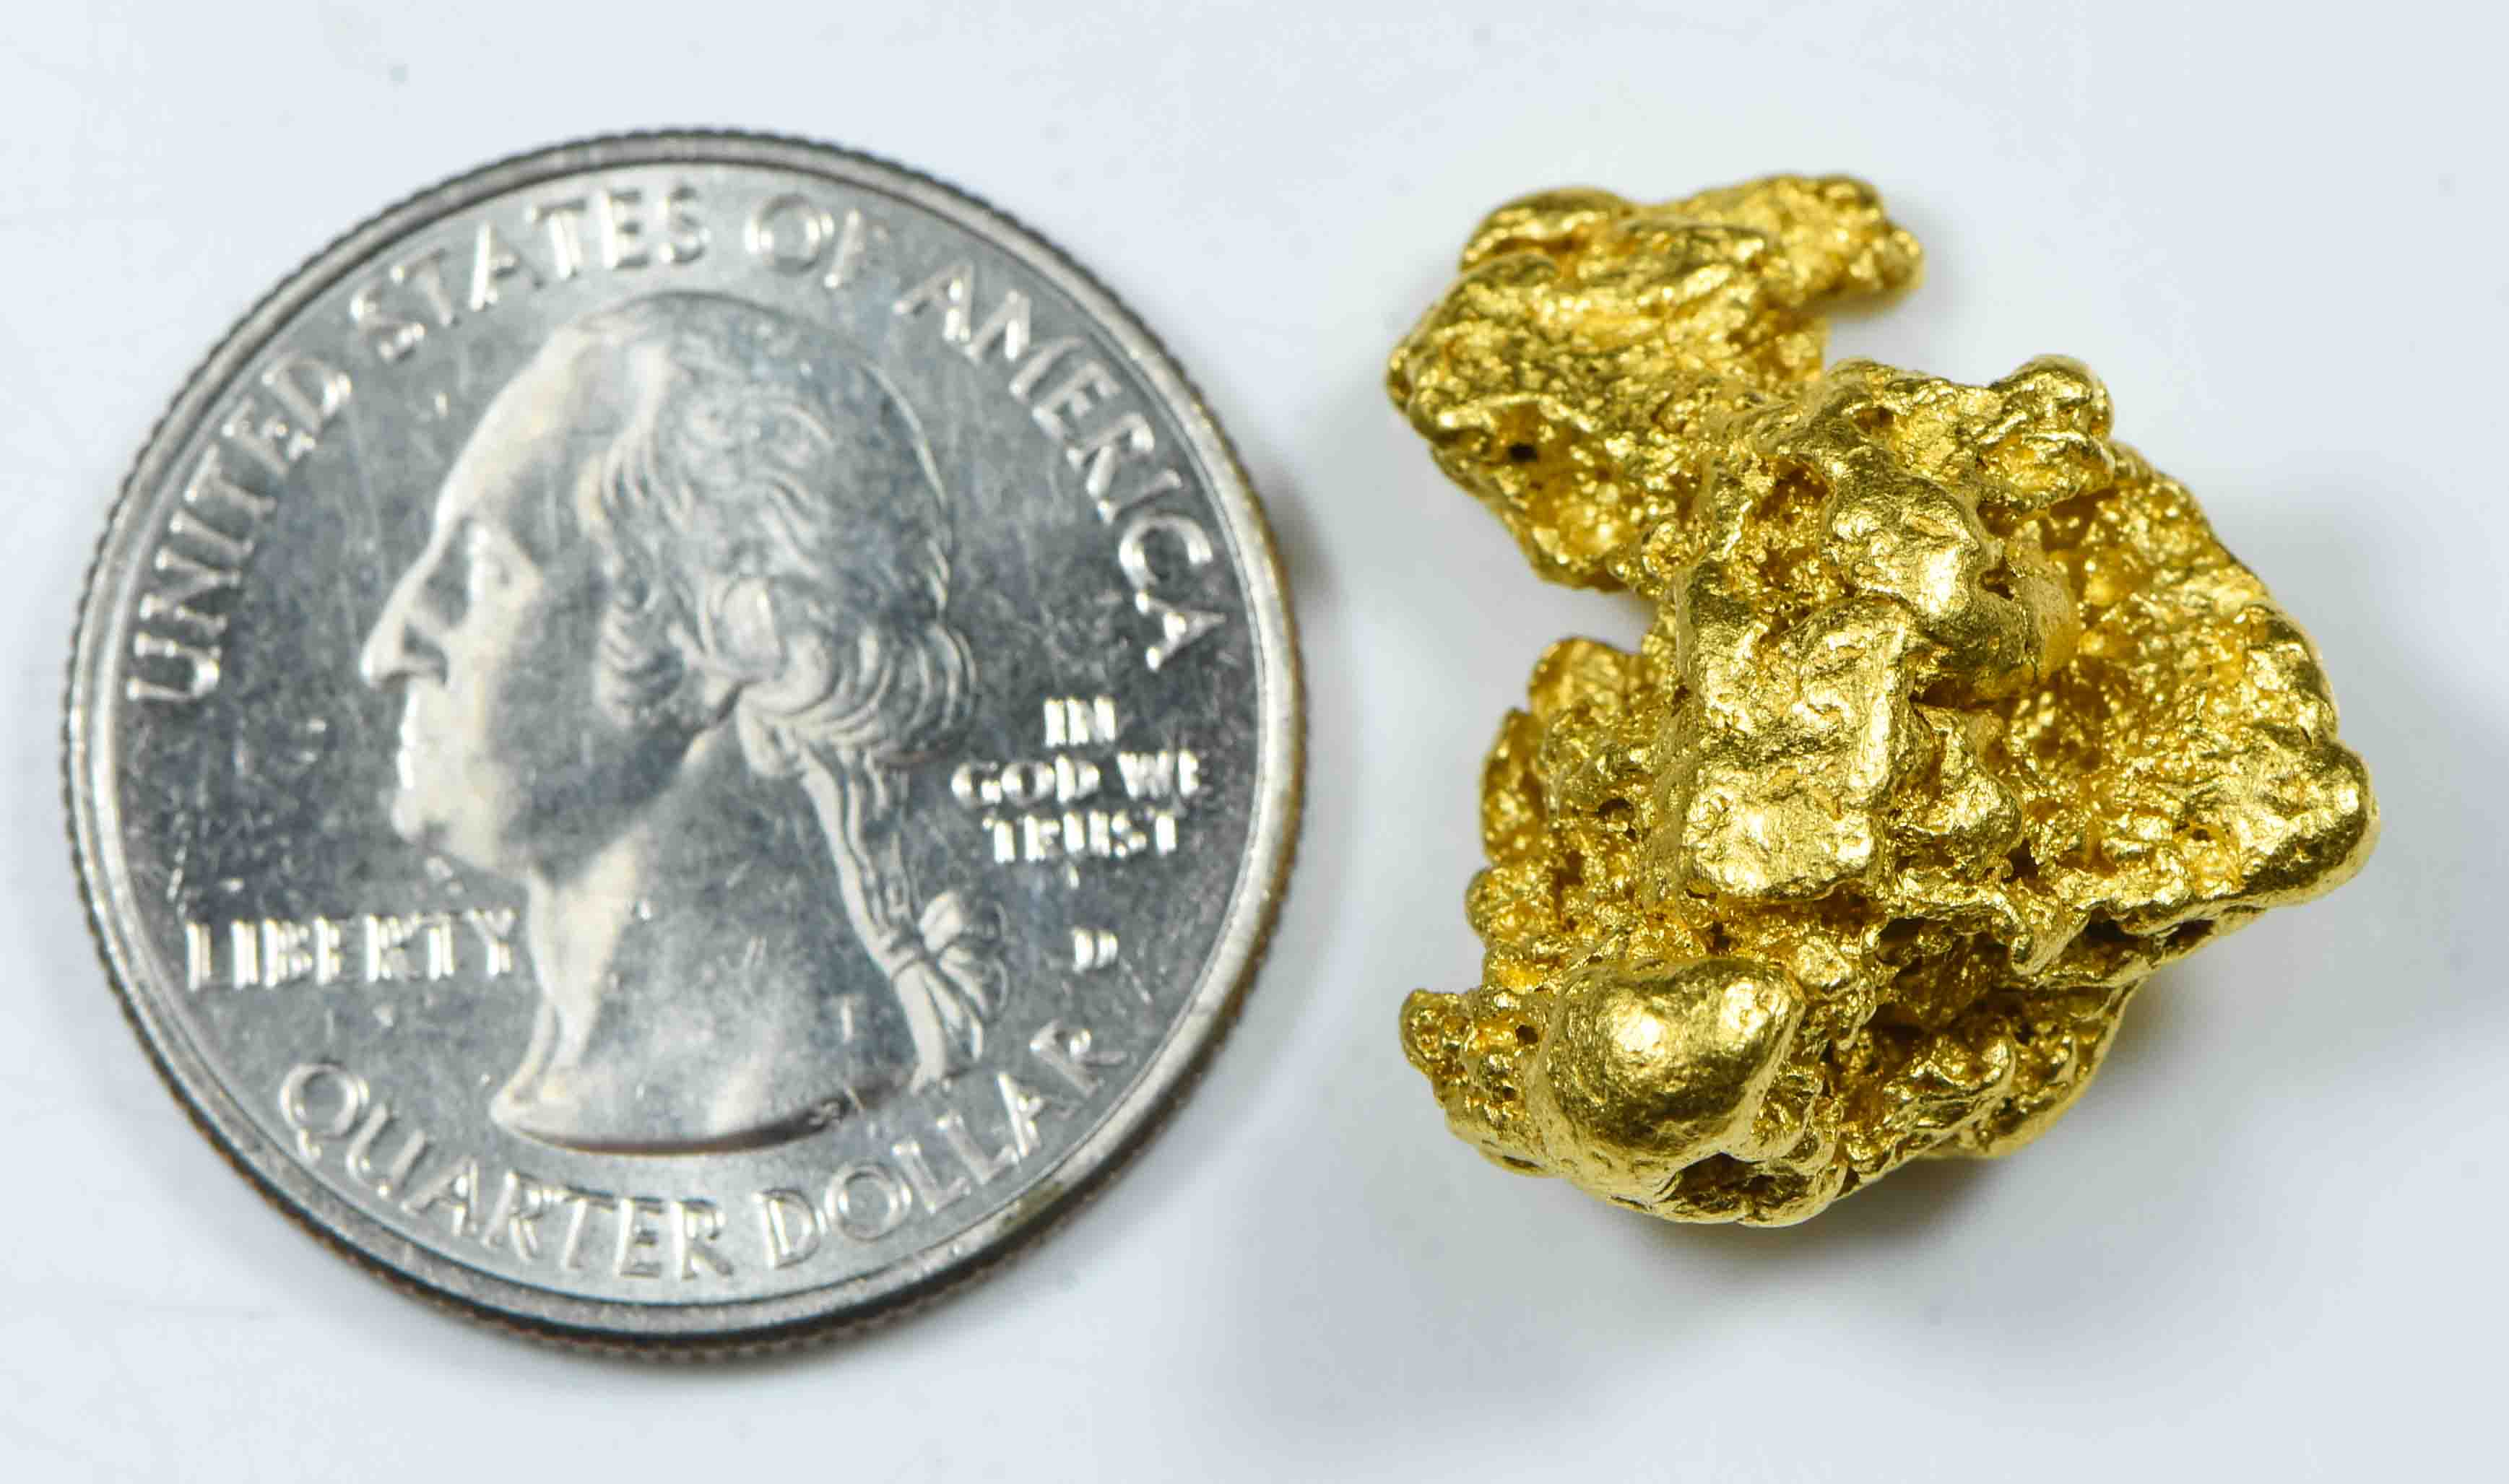 #1094 Natural Gold Nugget Australian 13.73 Grams Genuine